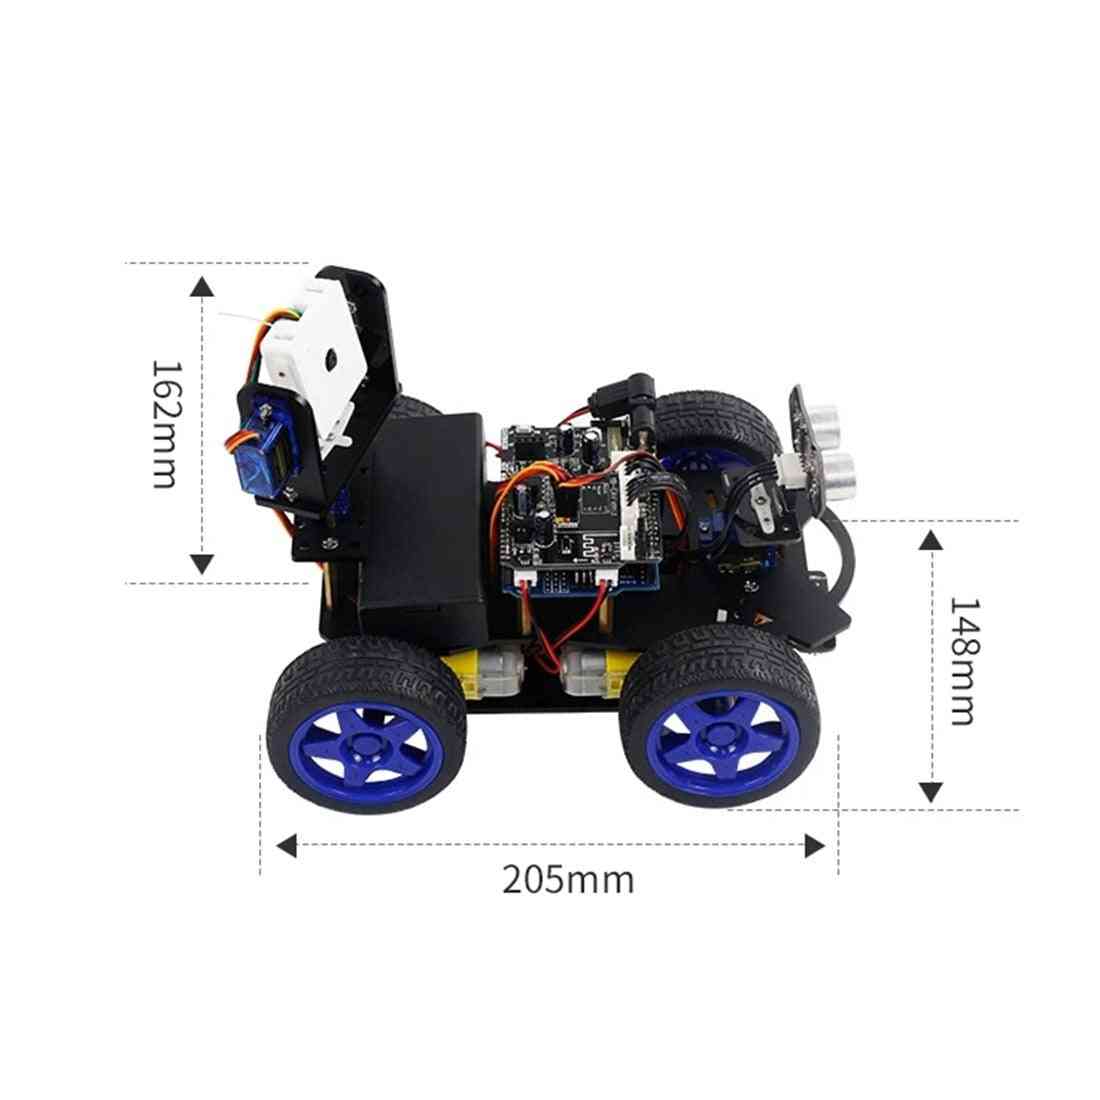 Lumineszierendes Ultraschallmodul, intelligentes Roboterauto, WLAN-Kamera, Gimbal-Kit für Arduino